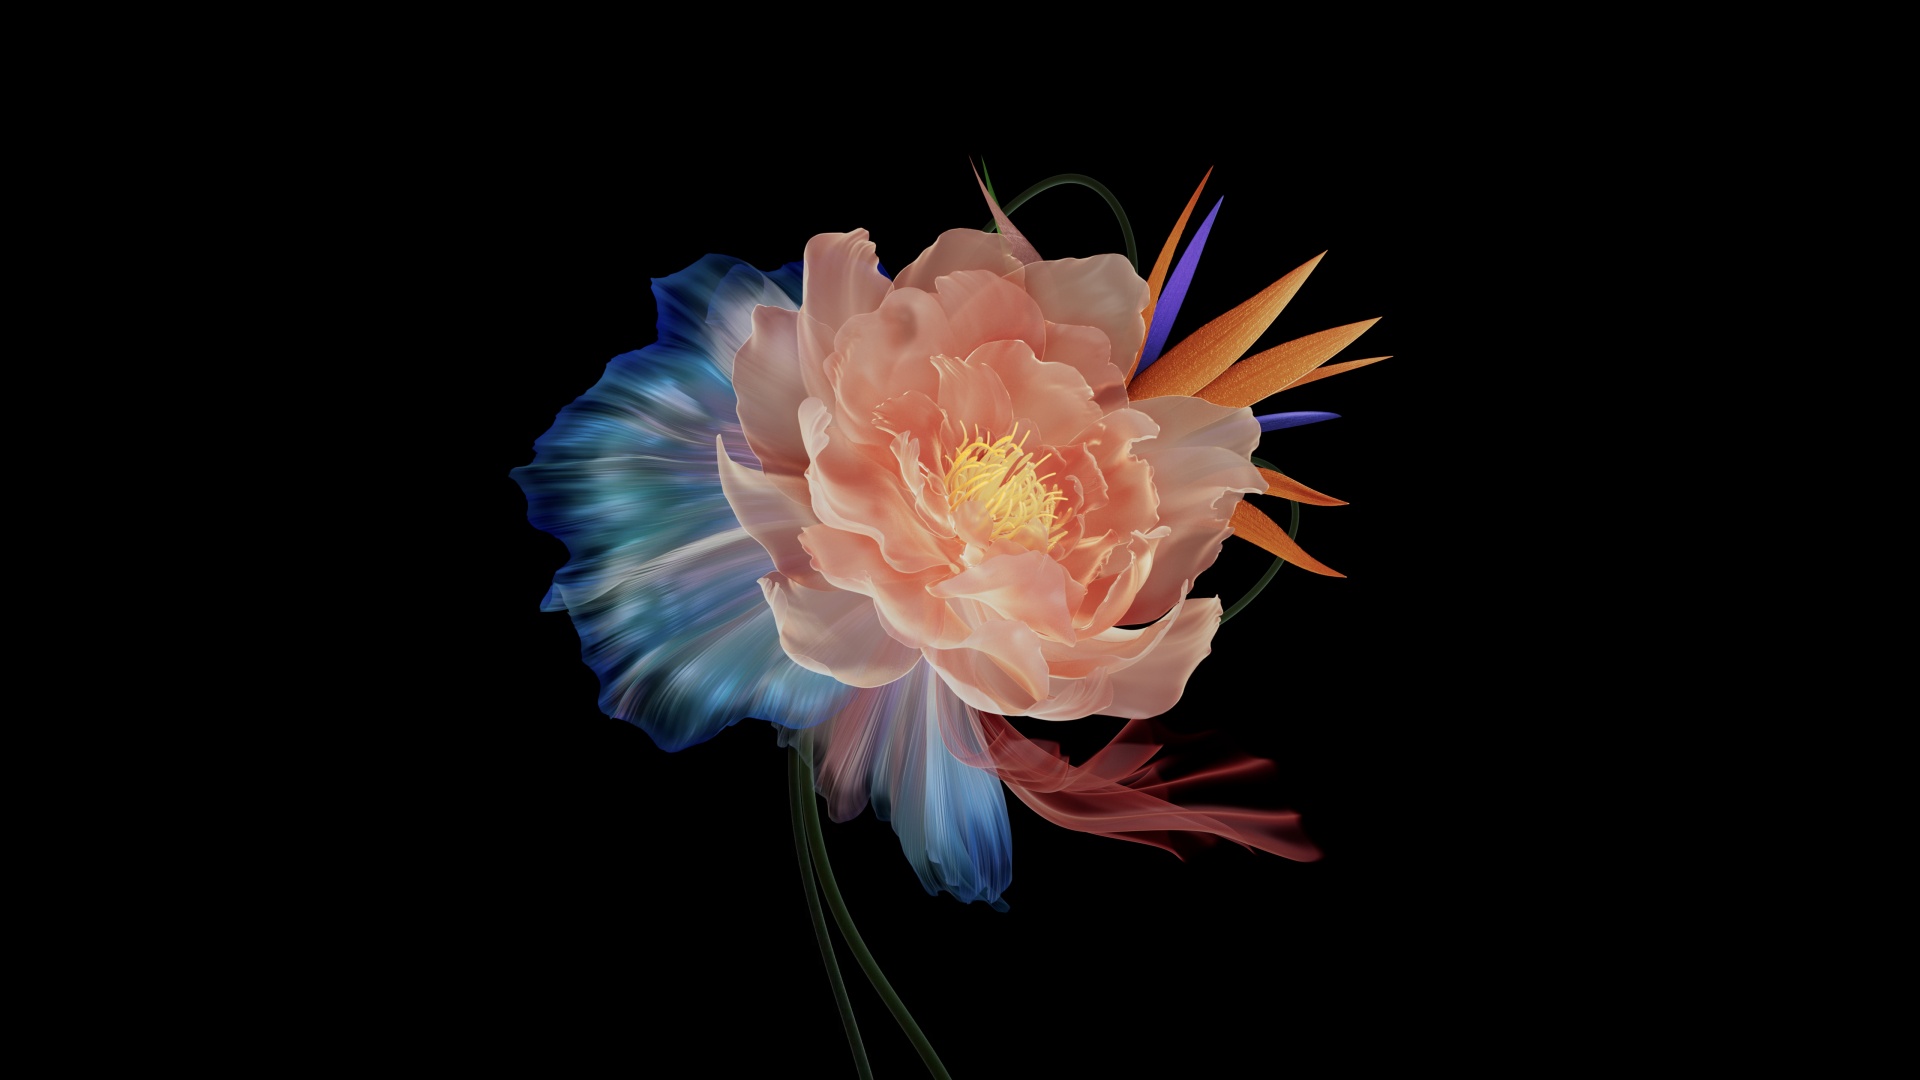 Abstract Flower Wallpaper 8k Ultra HD ID:5852